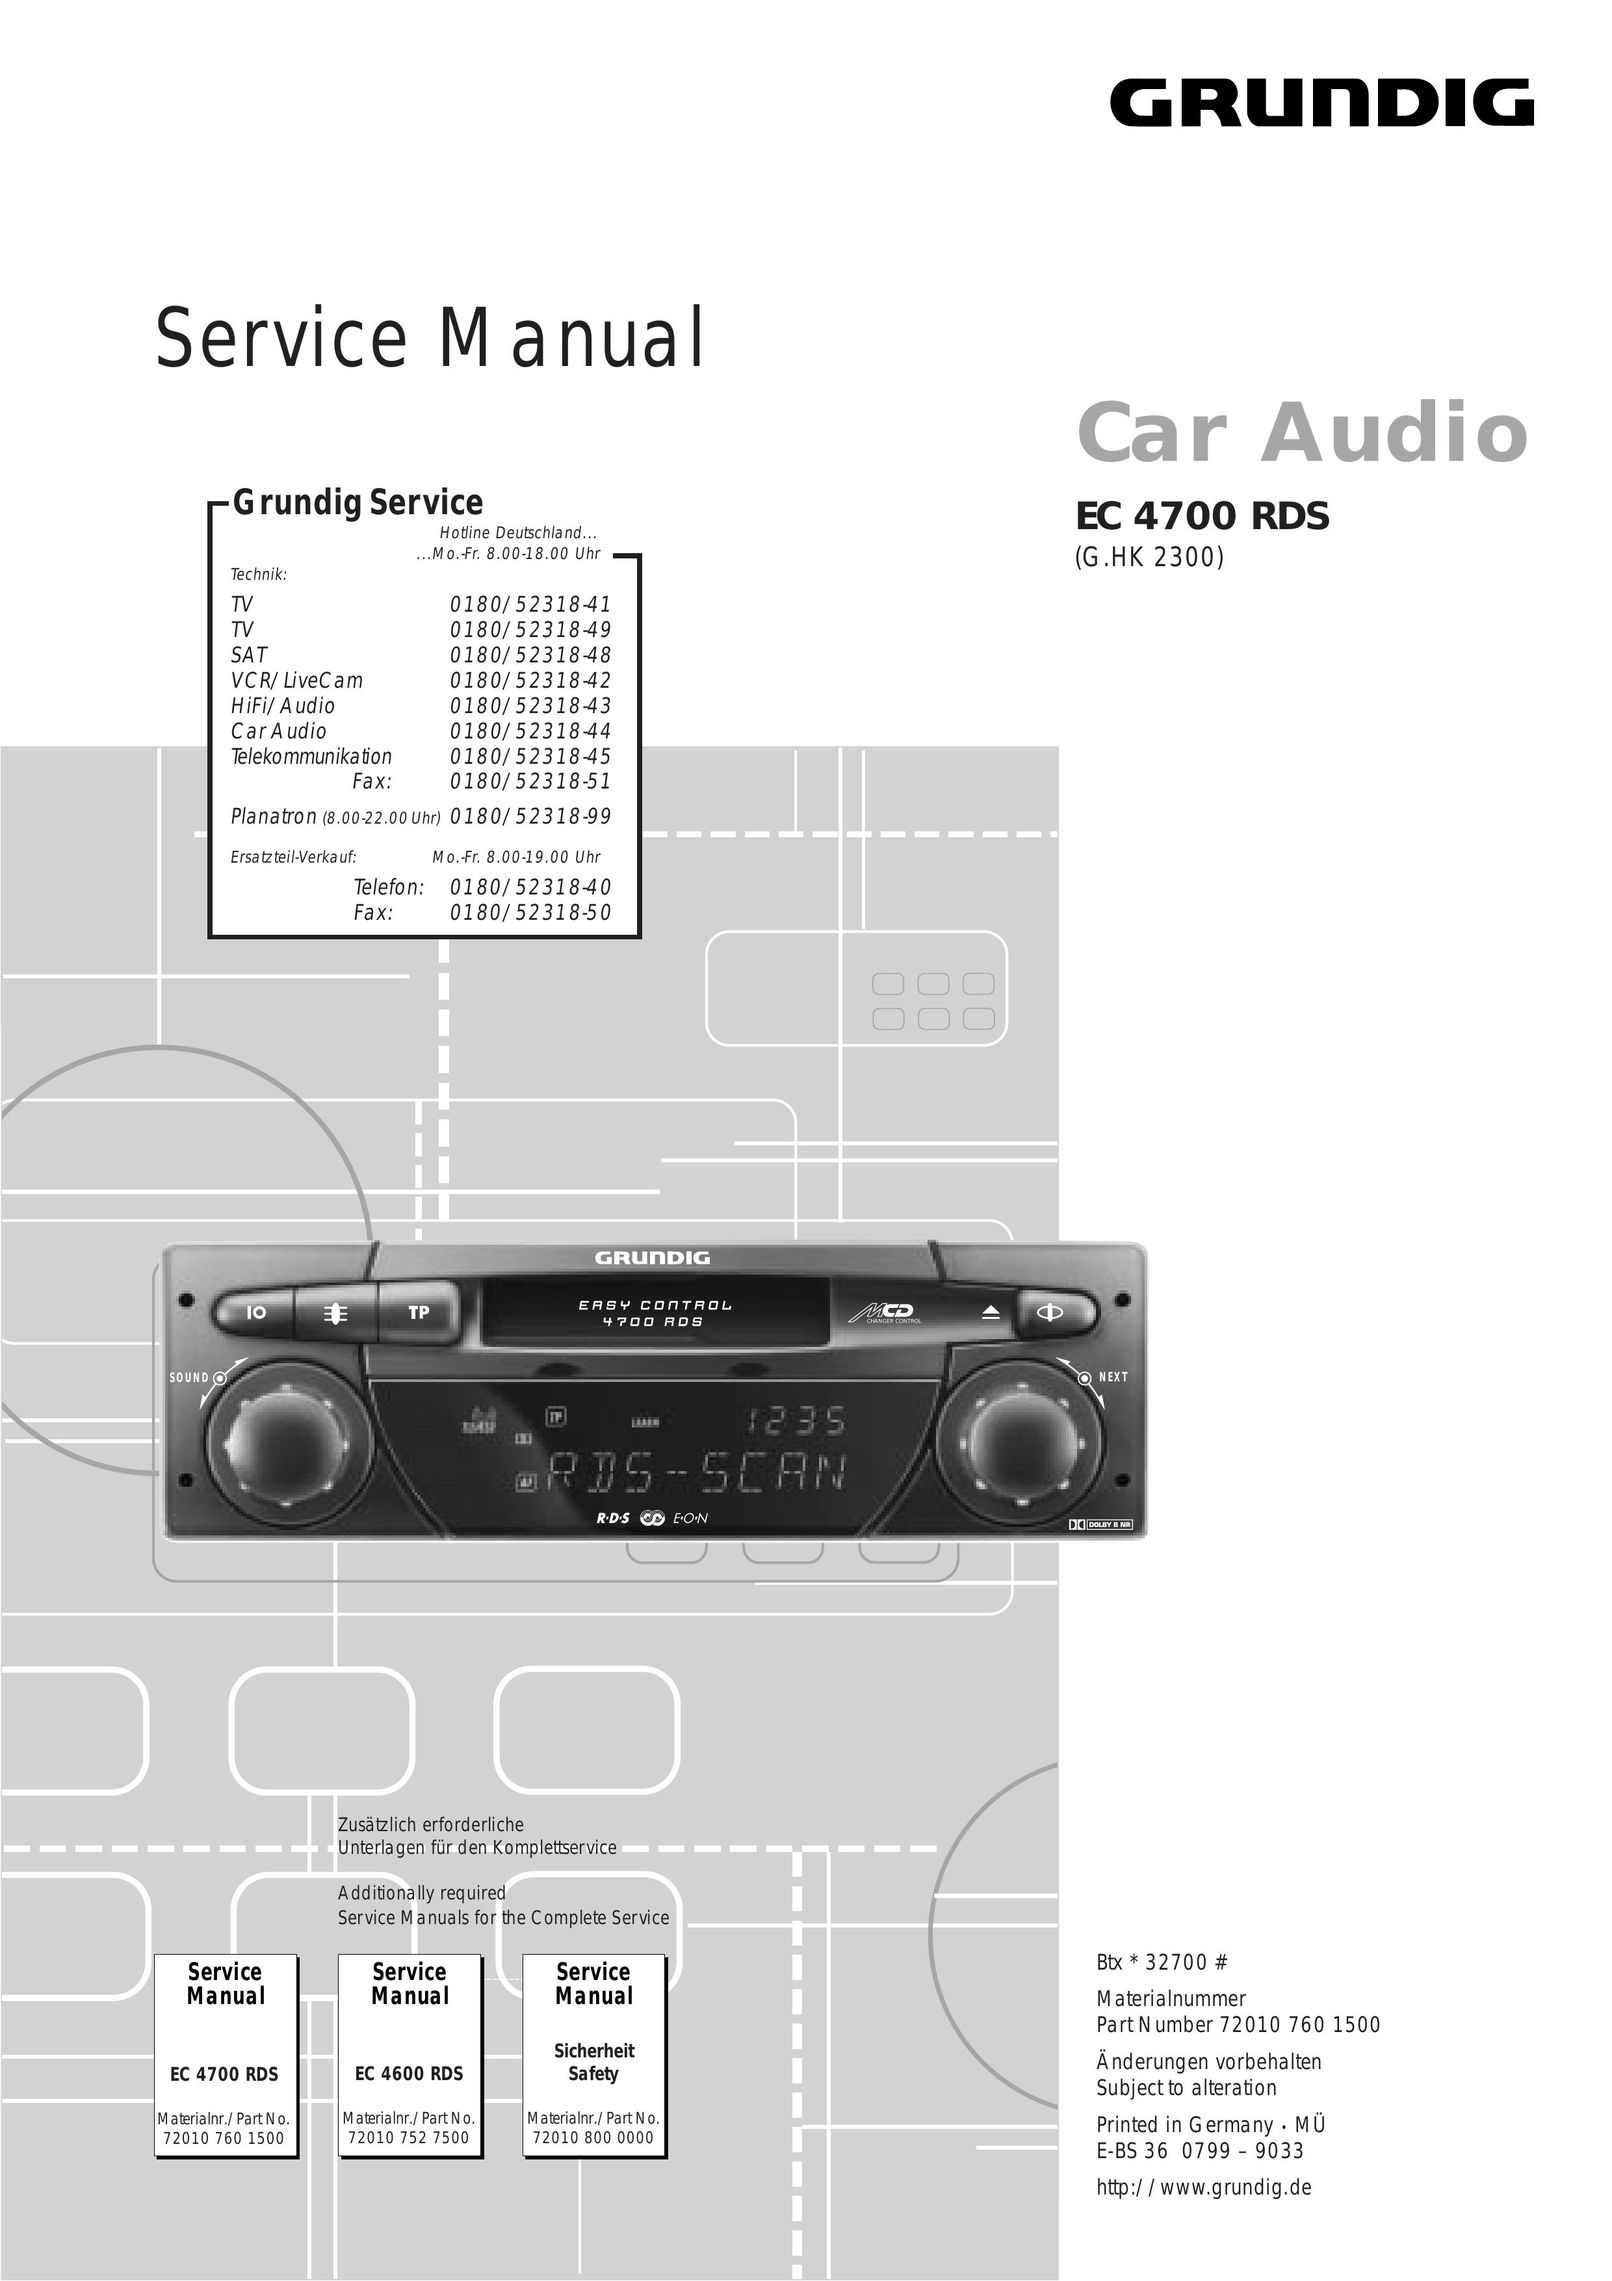 Grundig G.HK 2300 Car Stereo System User Manual